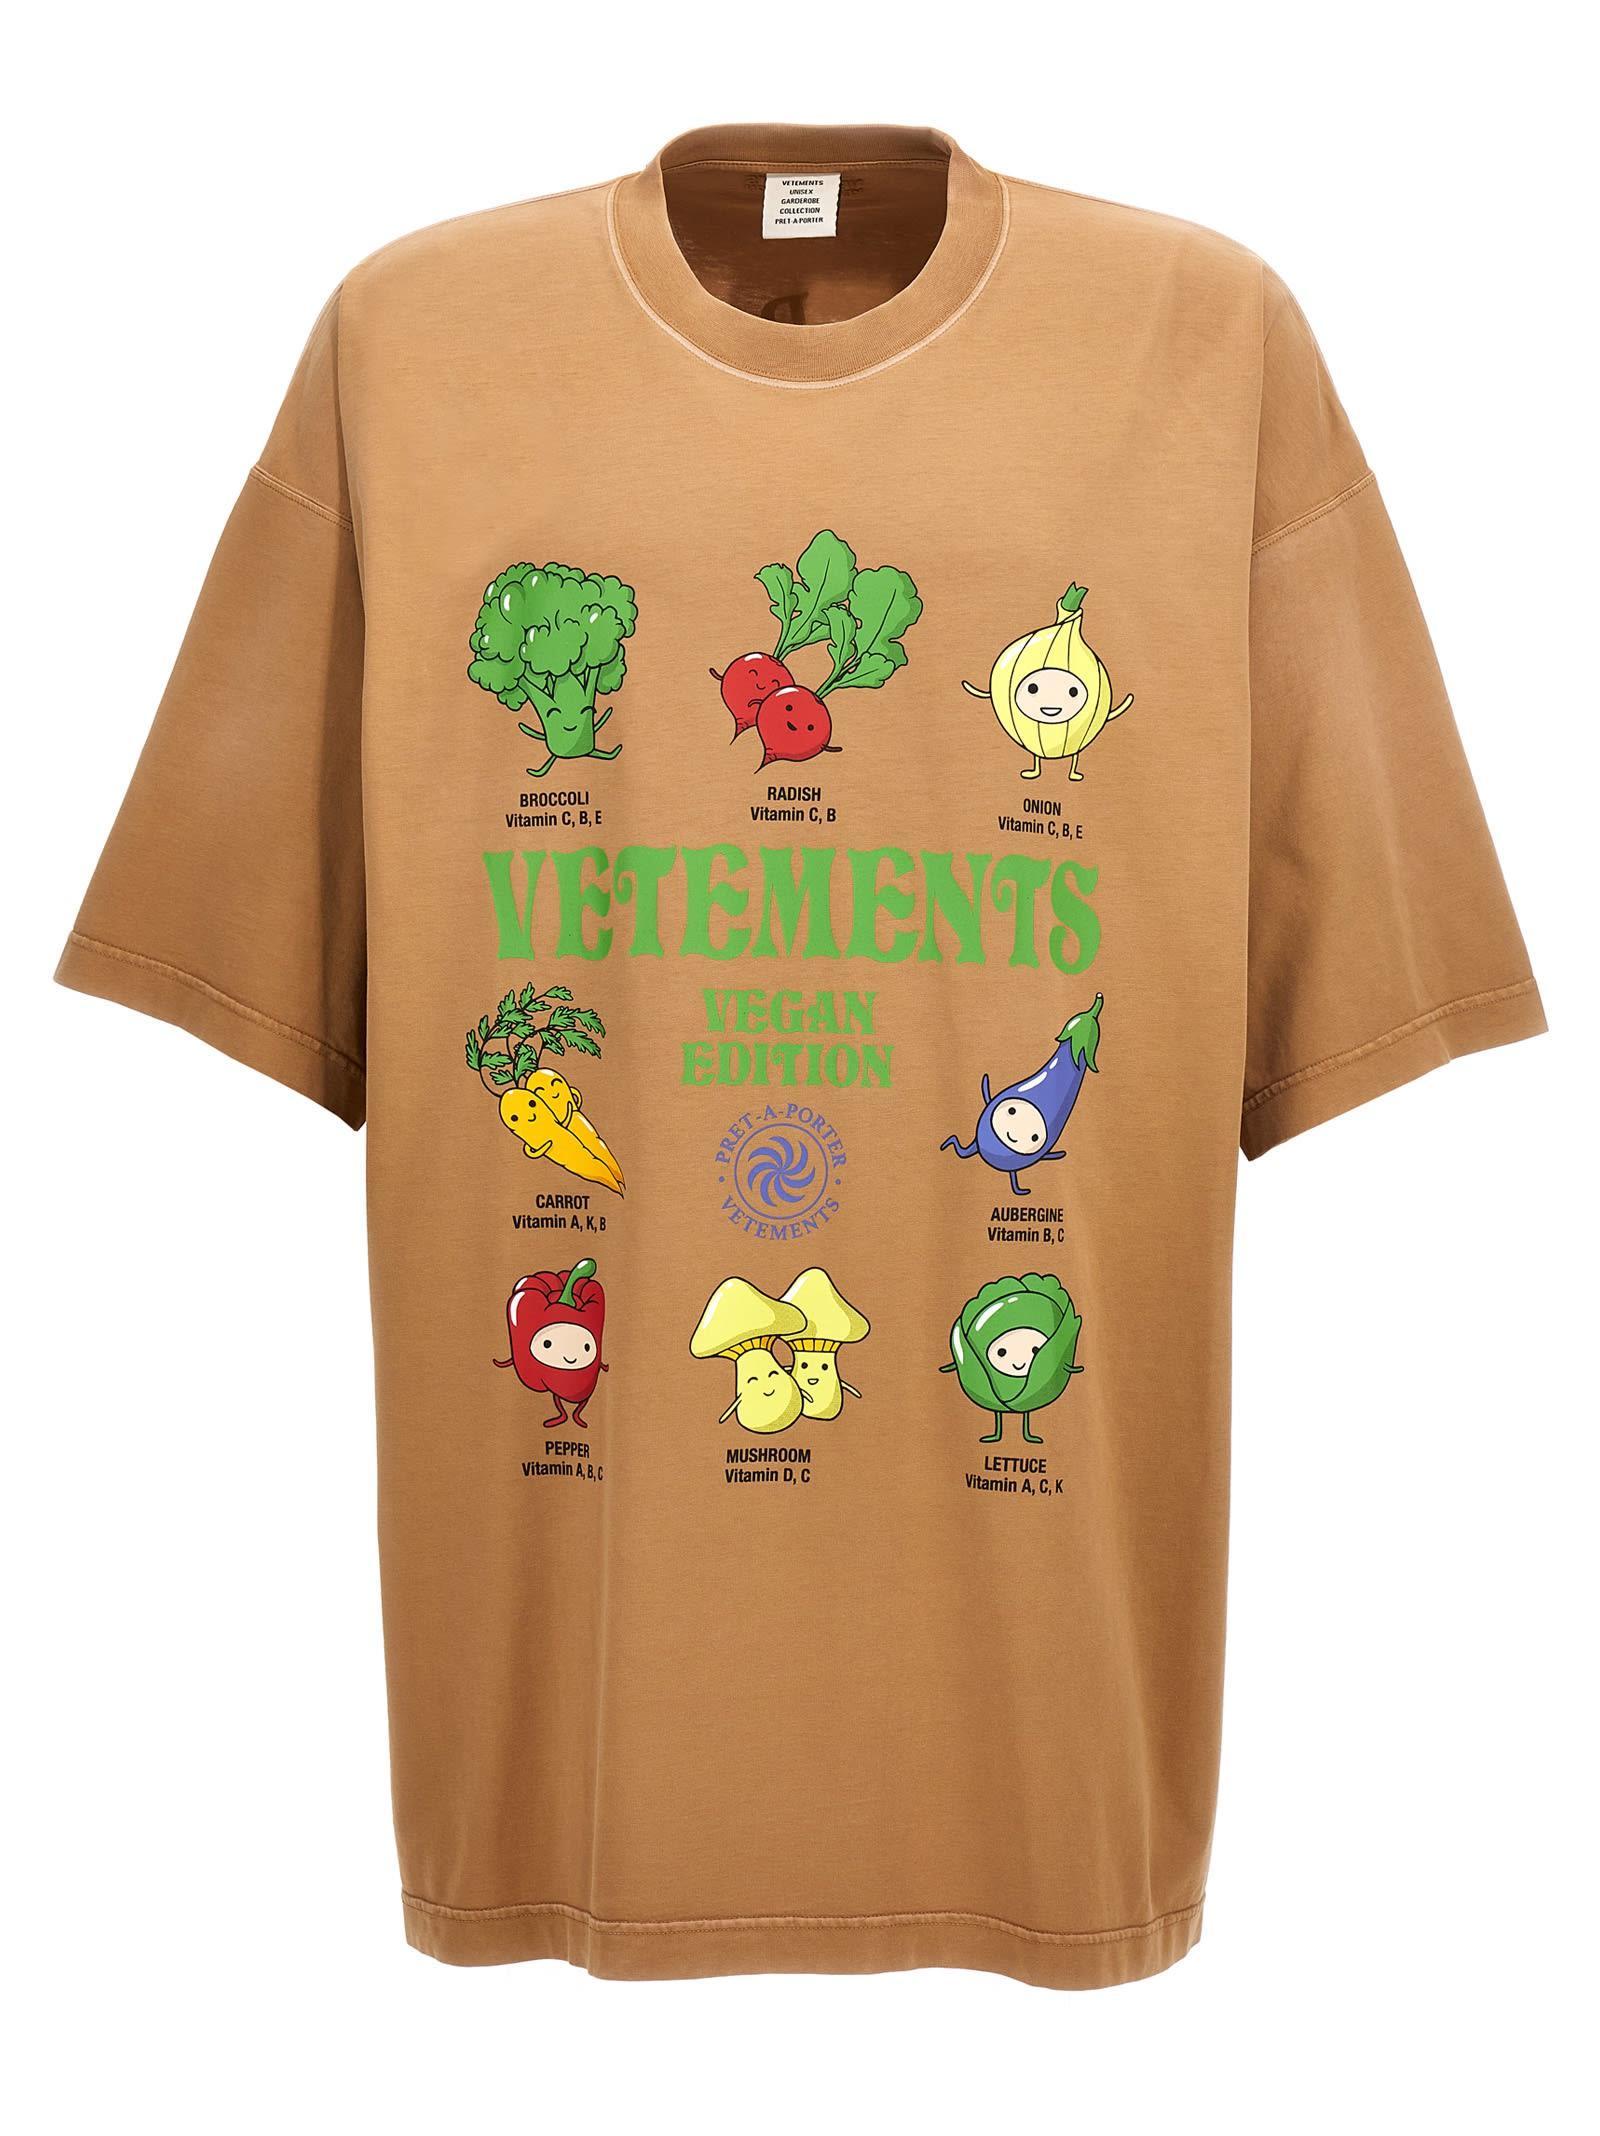 Vetements Vegan Edition T-shirt in Natural | Lyst